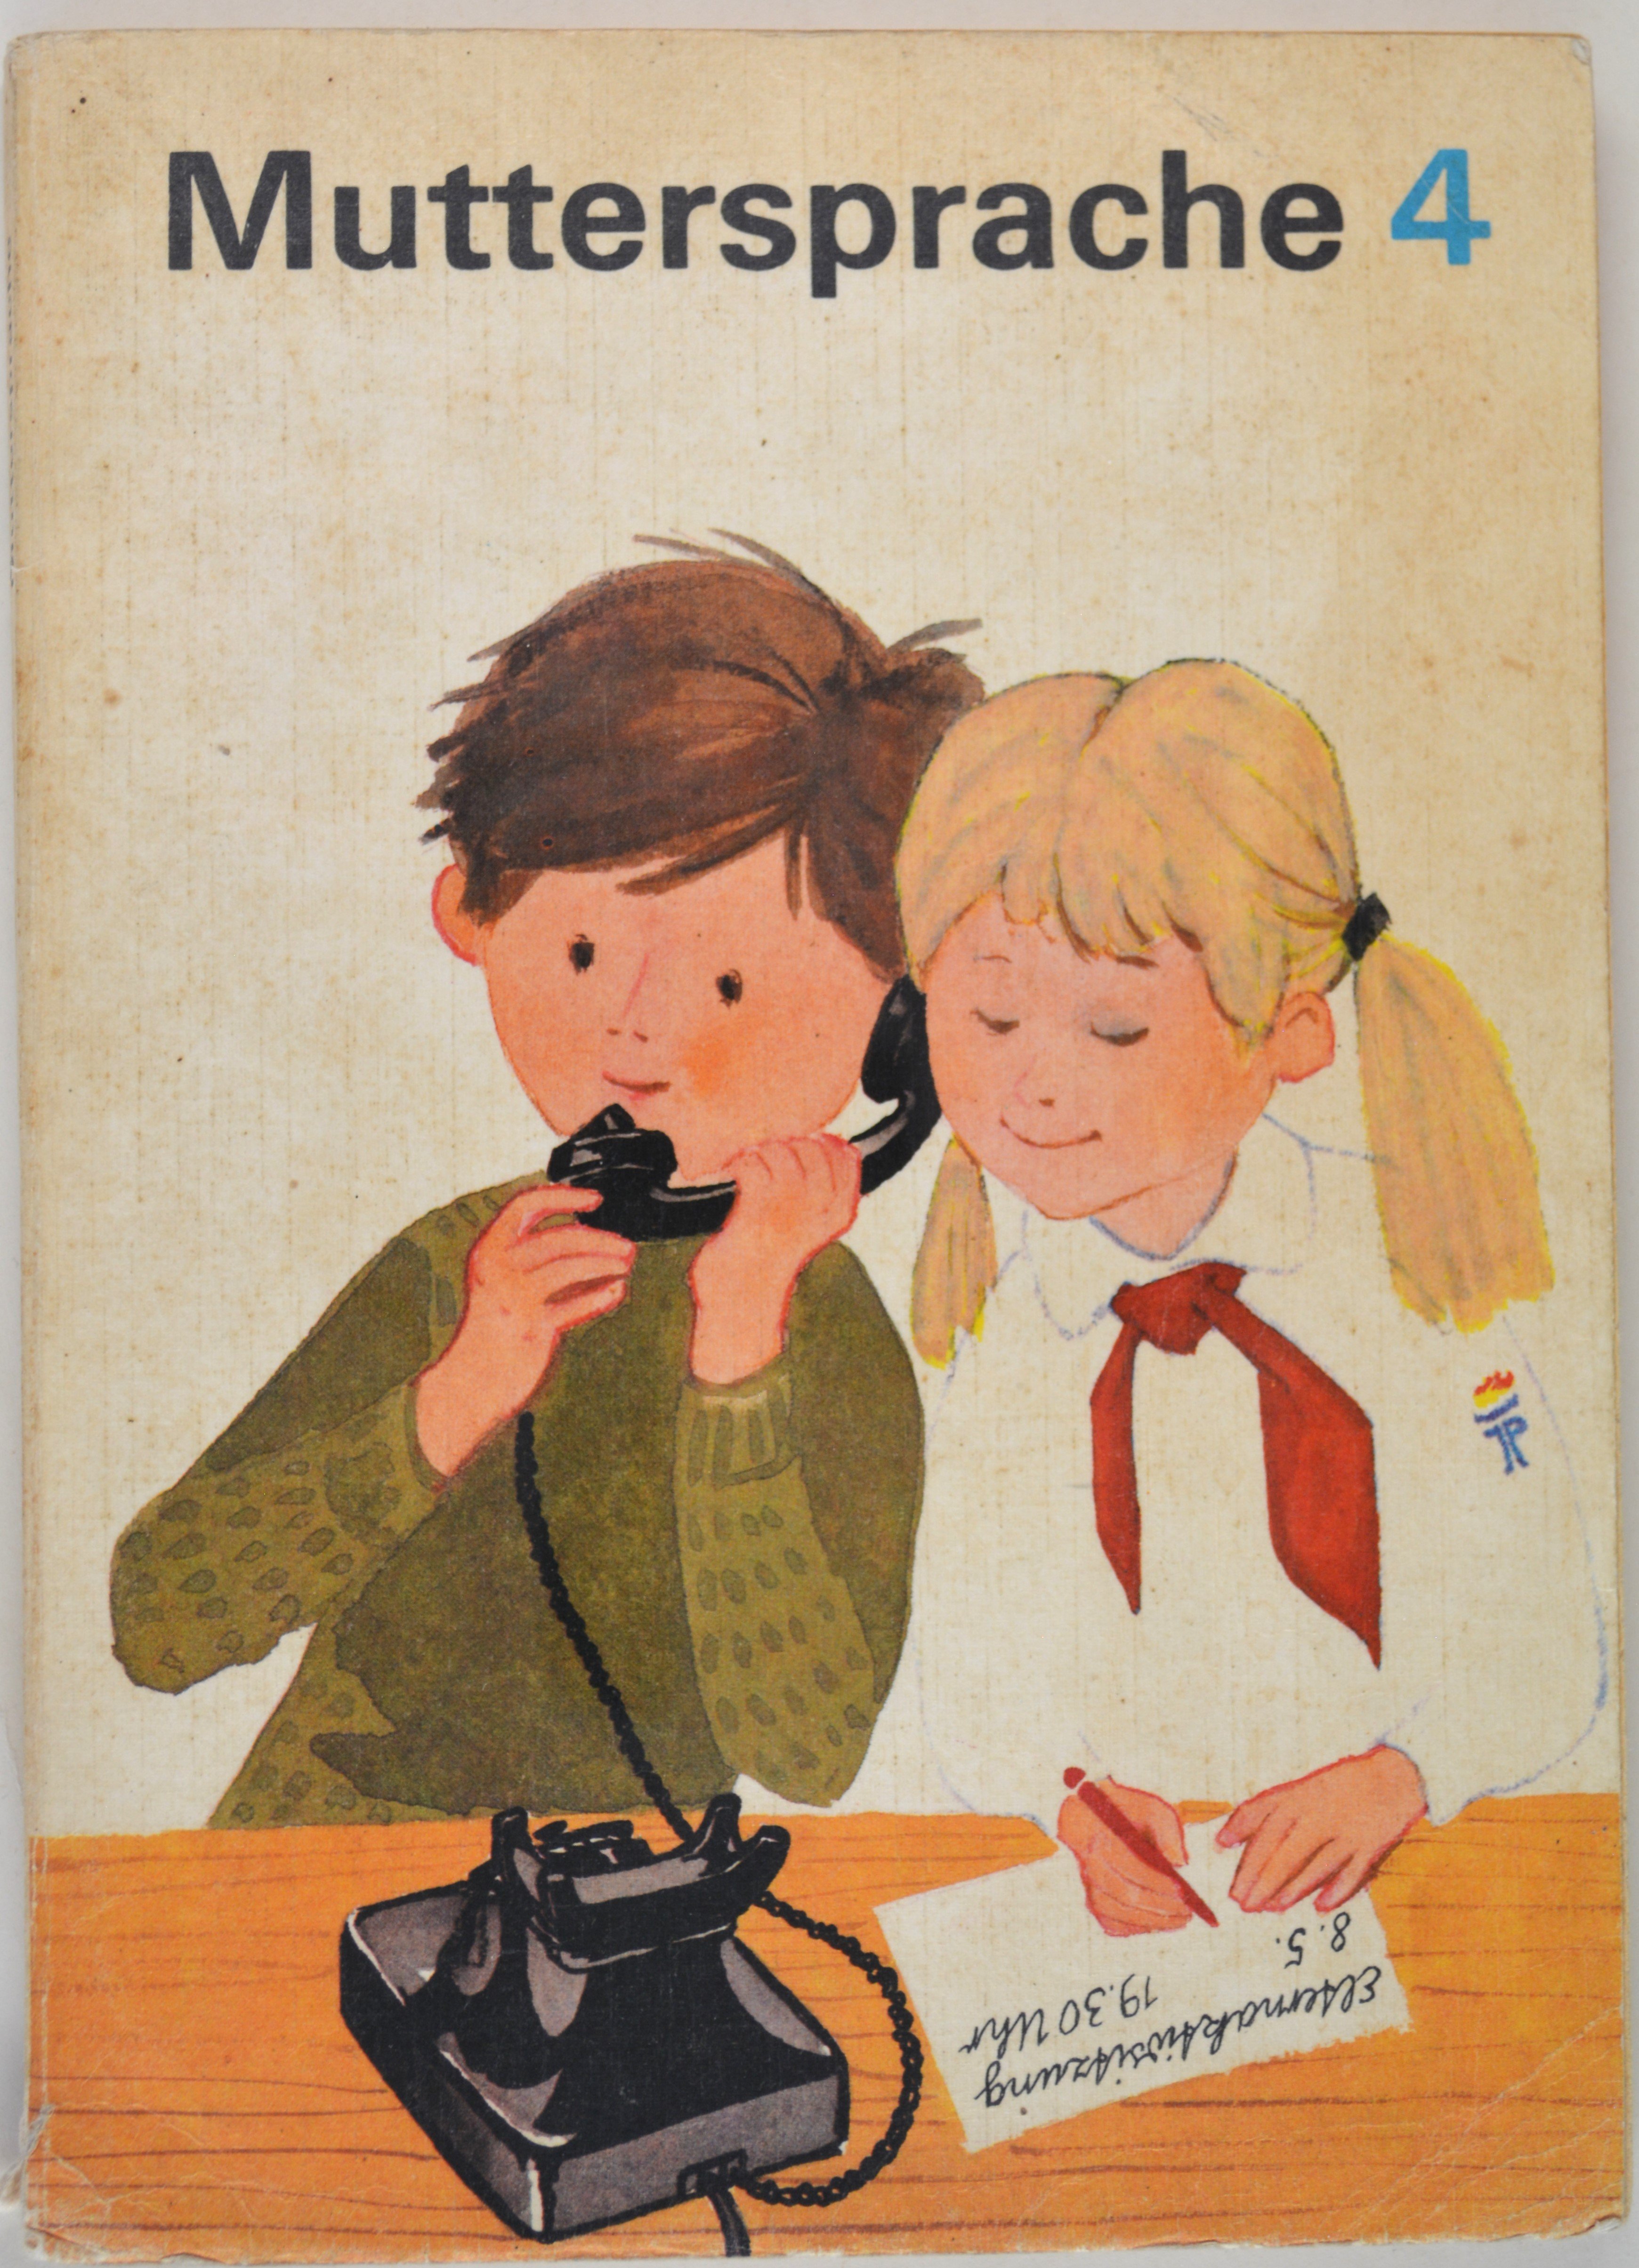 Buch: Schulbuch "Muttersprache 4" (DDR Geschichtsmuseum im Dokumentationszentrum Perleberg CC BY-SA)